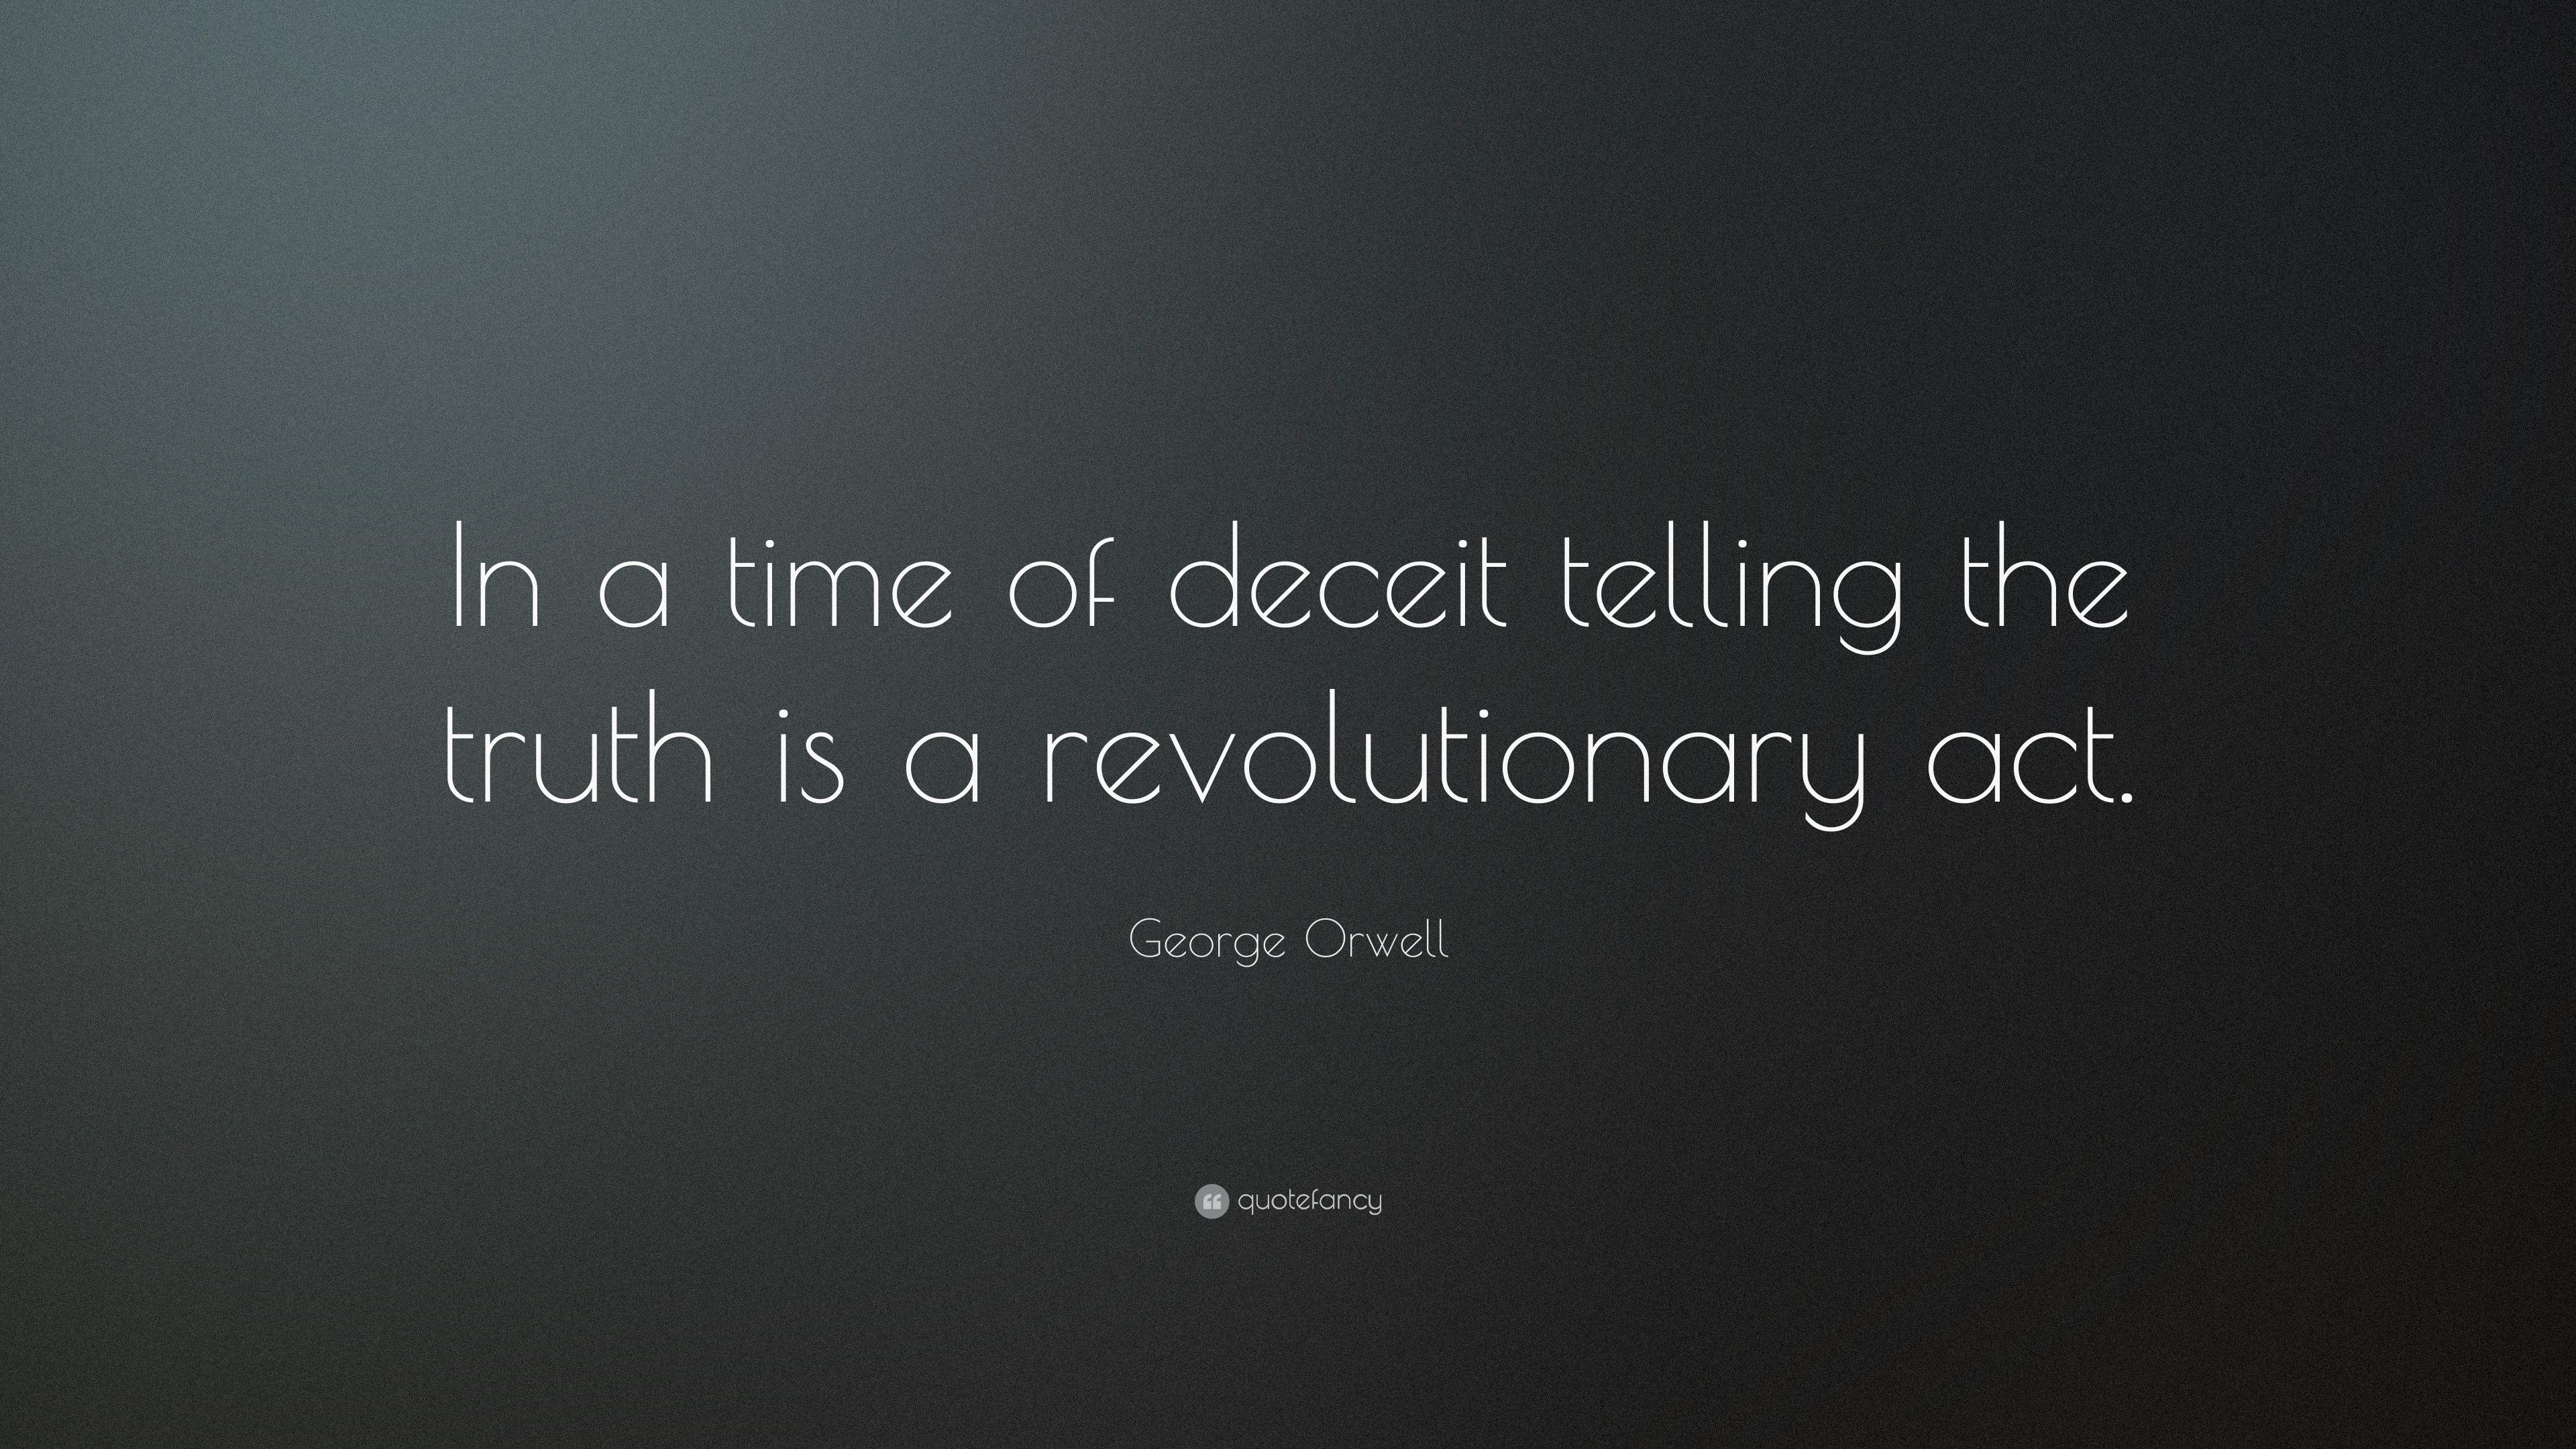 George Orwell Quotes .quotefancy.com